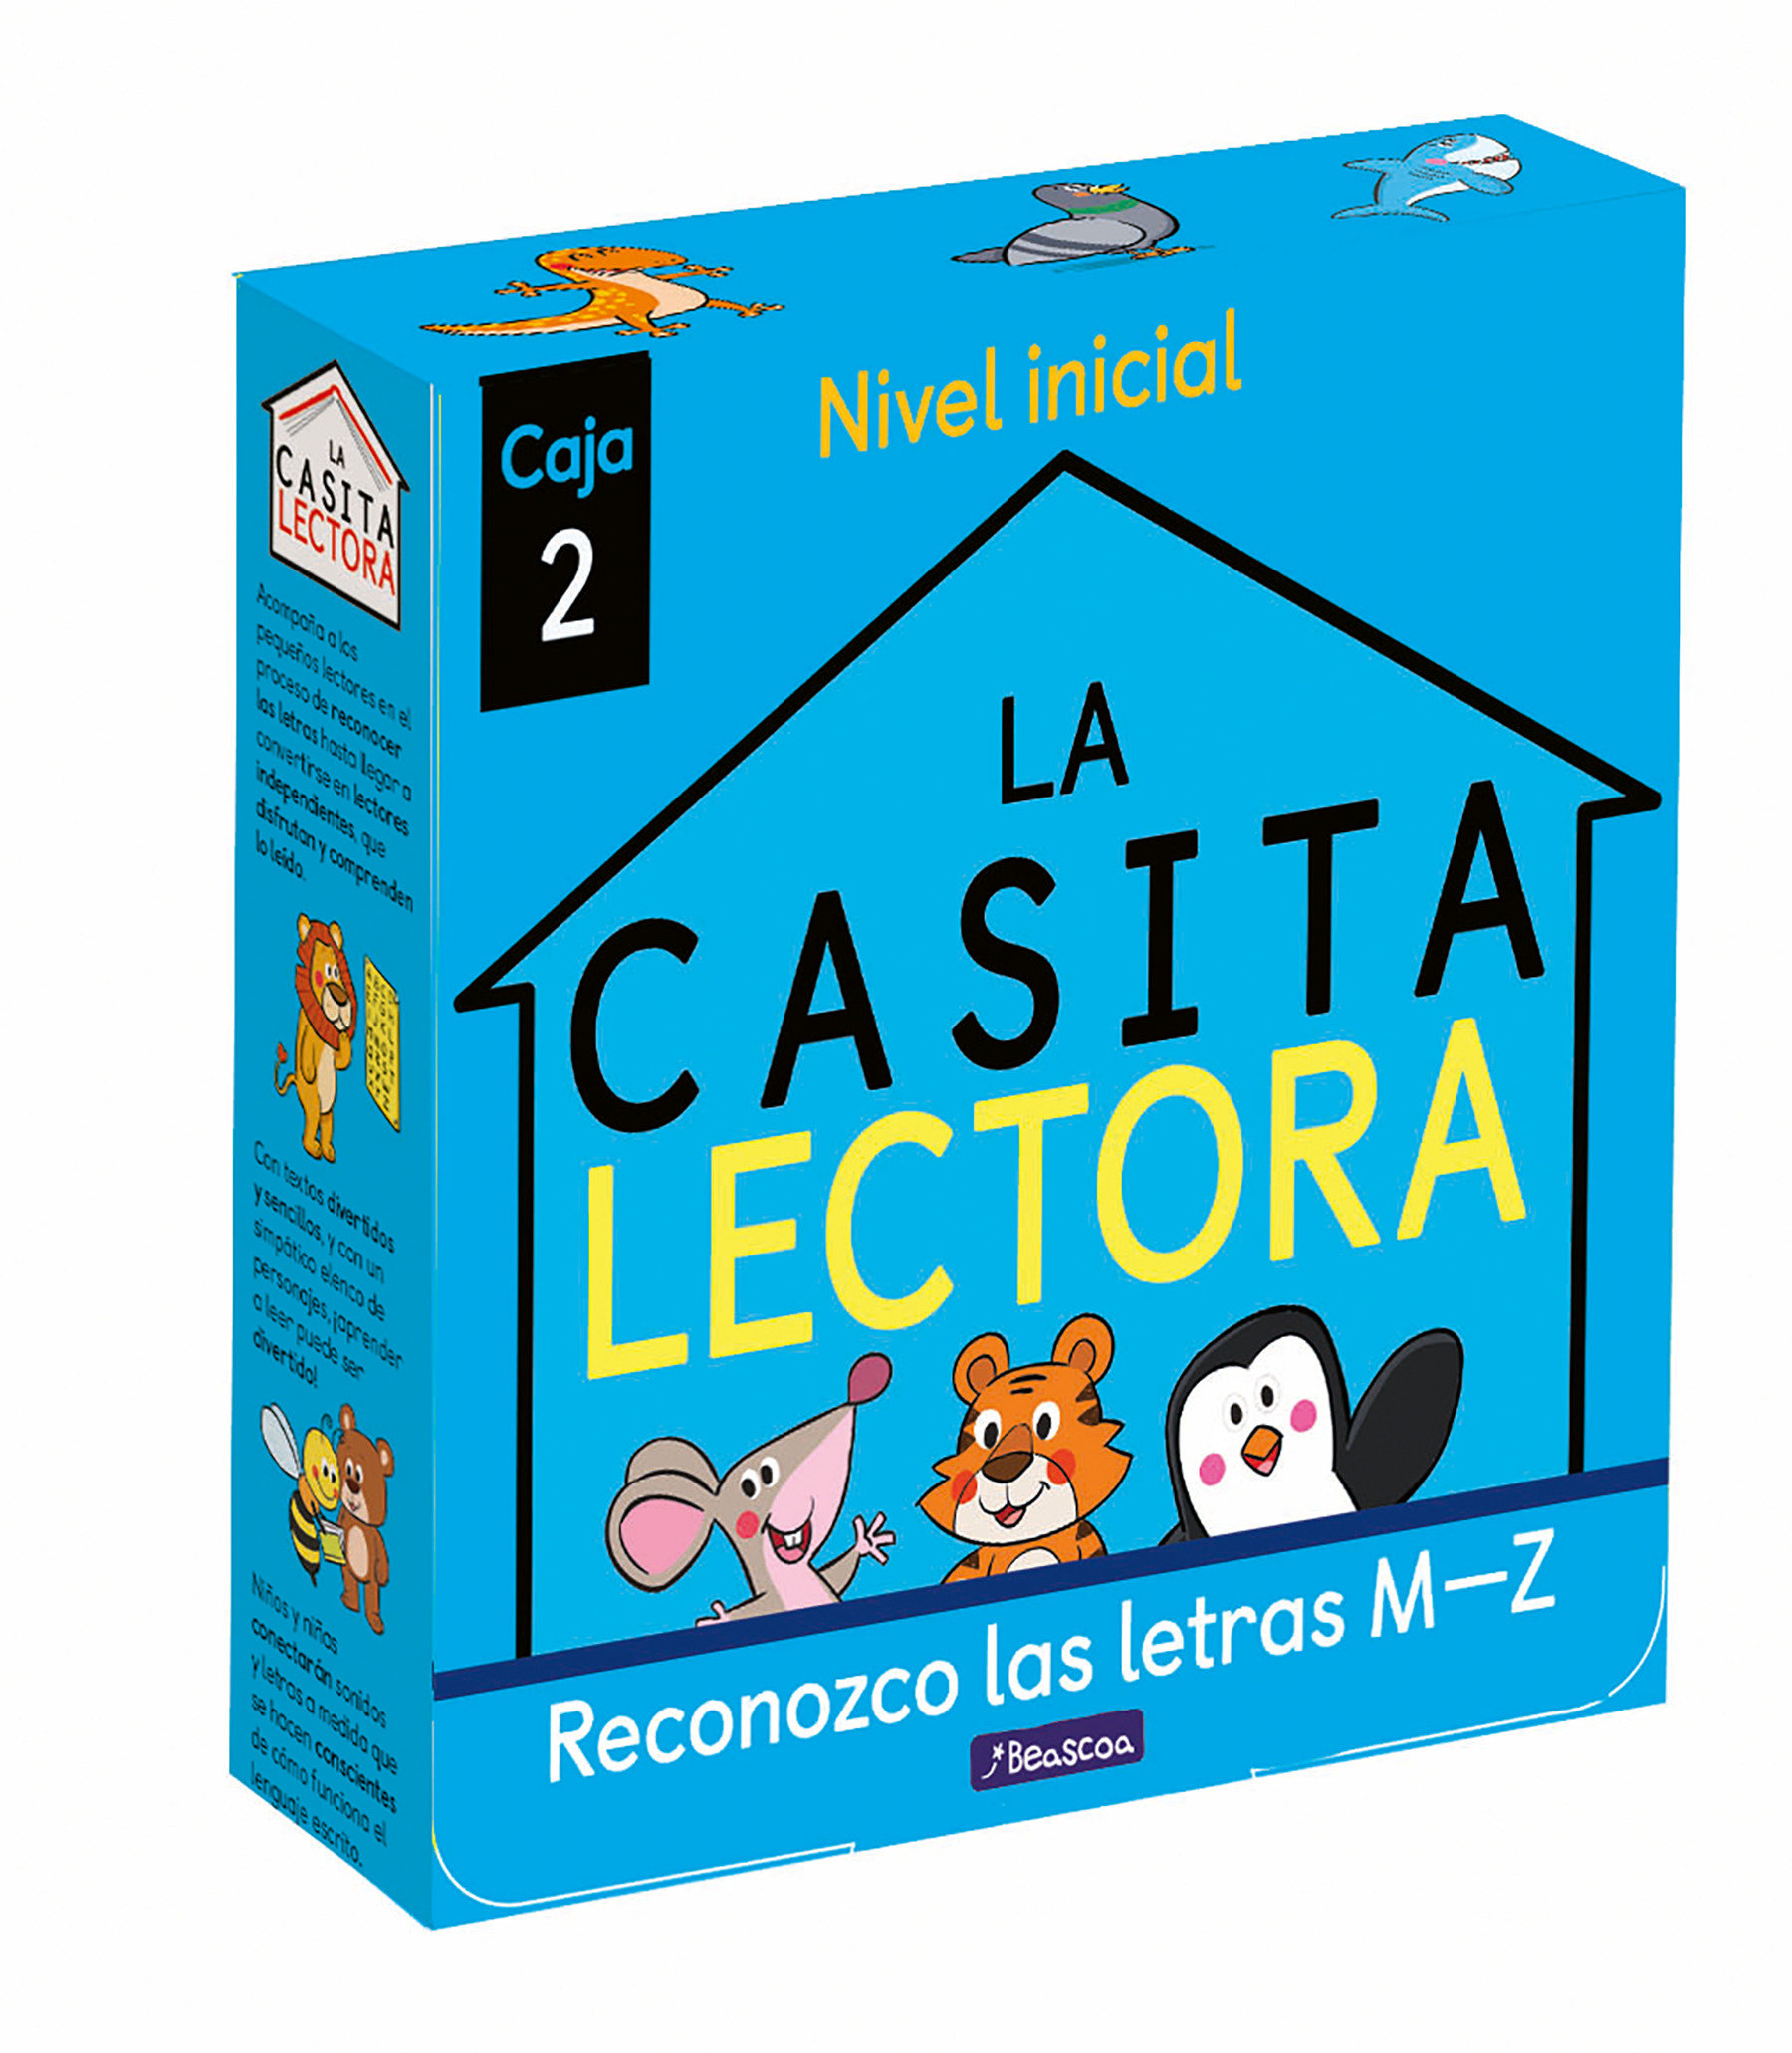 Phonics In Spanish - La Casita Lectora Caja 2: Reconozco Las Letras M-Z (Nivel I Nicial) / The Reading House Set 2: Letter Recognition M-Z (Hardcover Book)